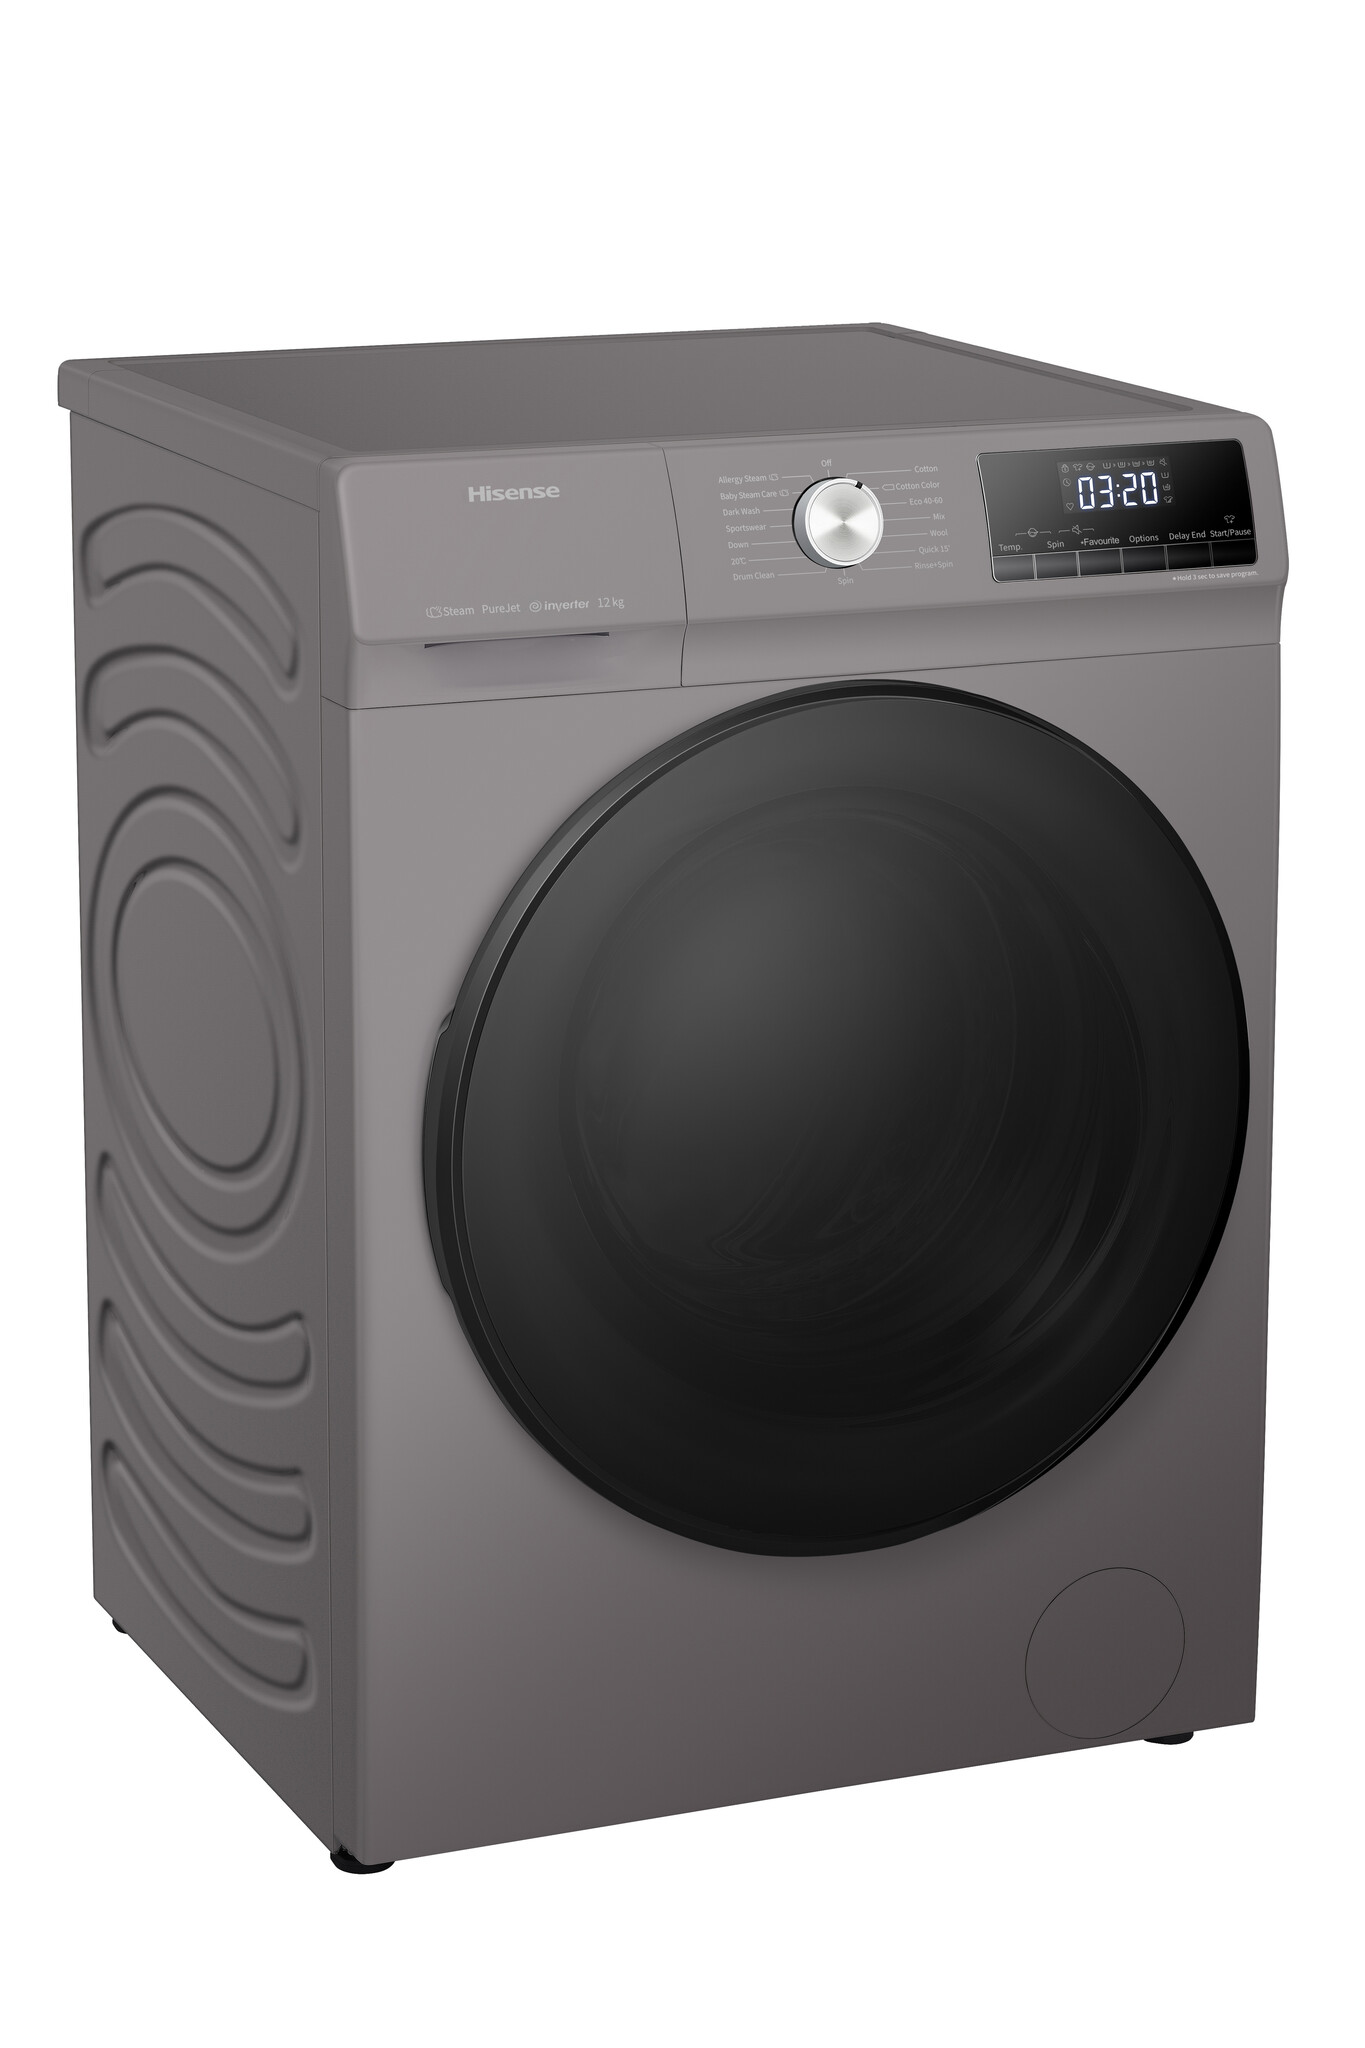 Hisense WFQA1214EVJMT 12Kg Washing Machine with 1400 rpm – Titanium – A Rated #367131